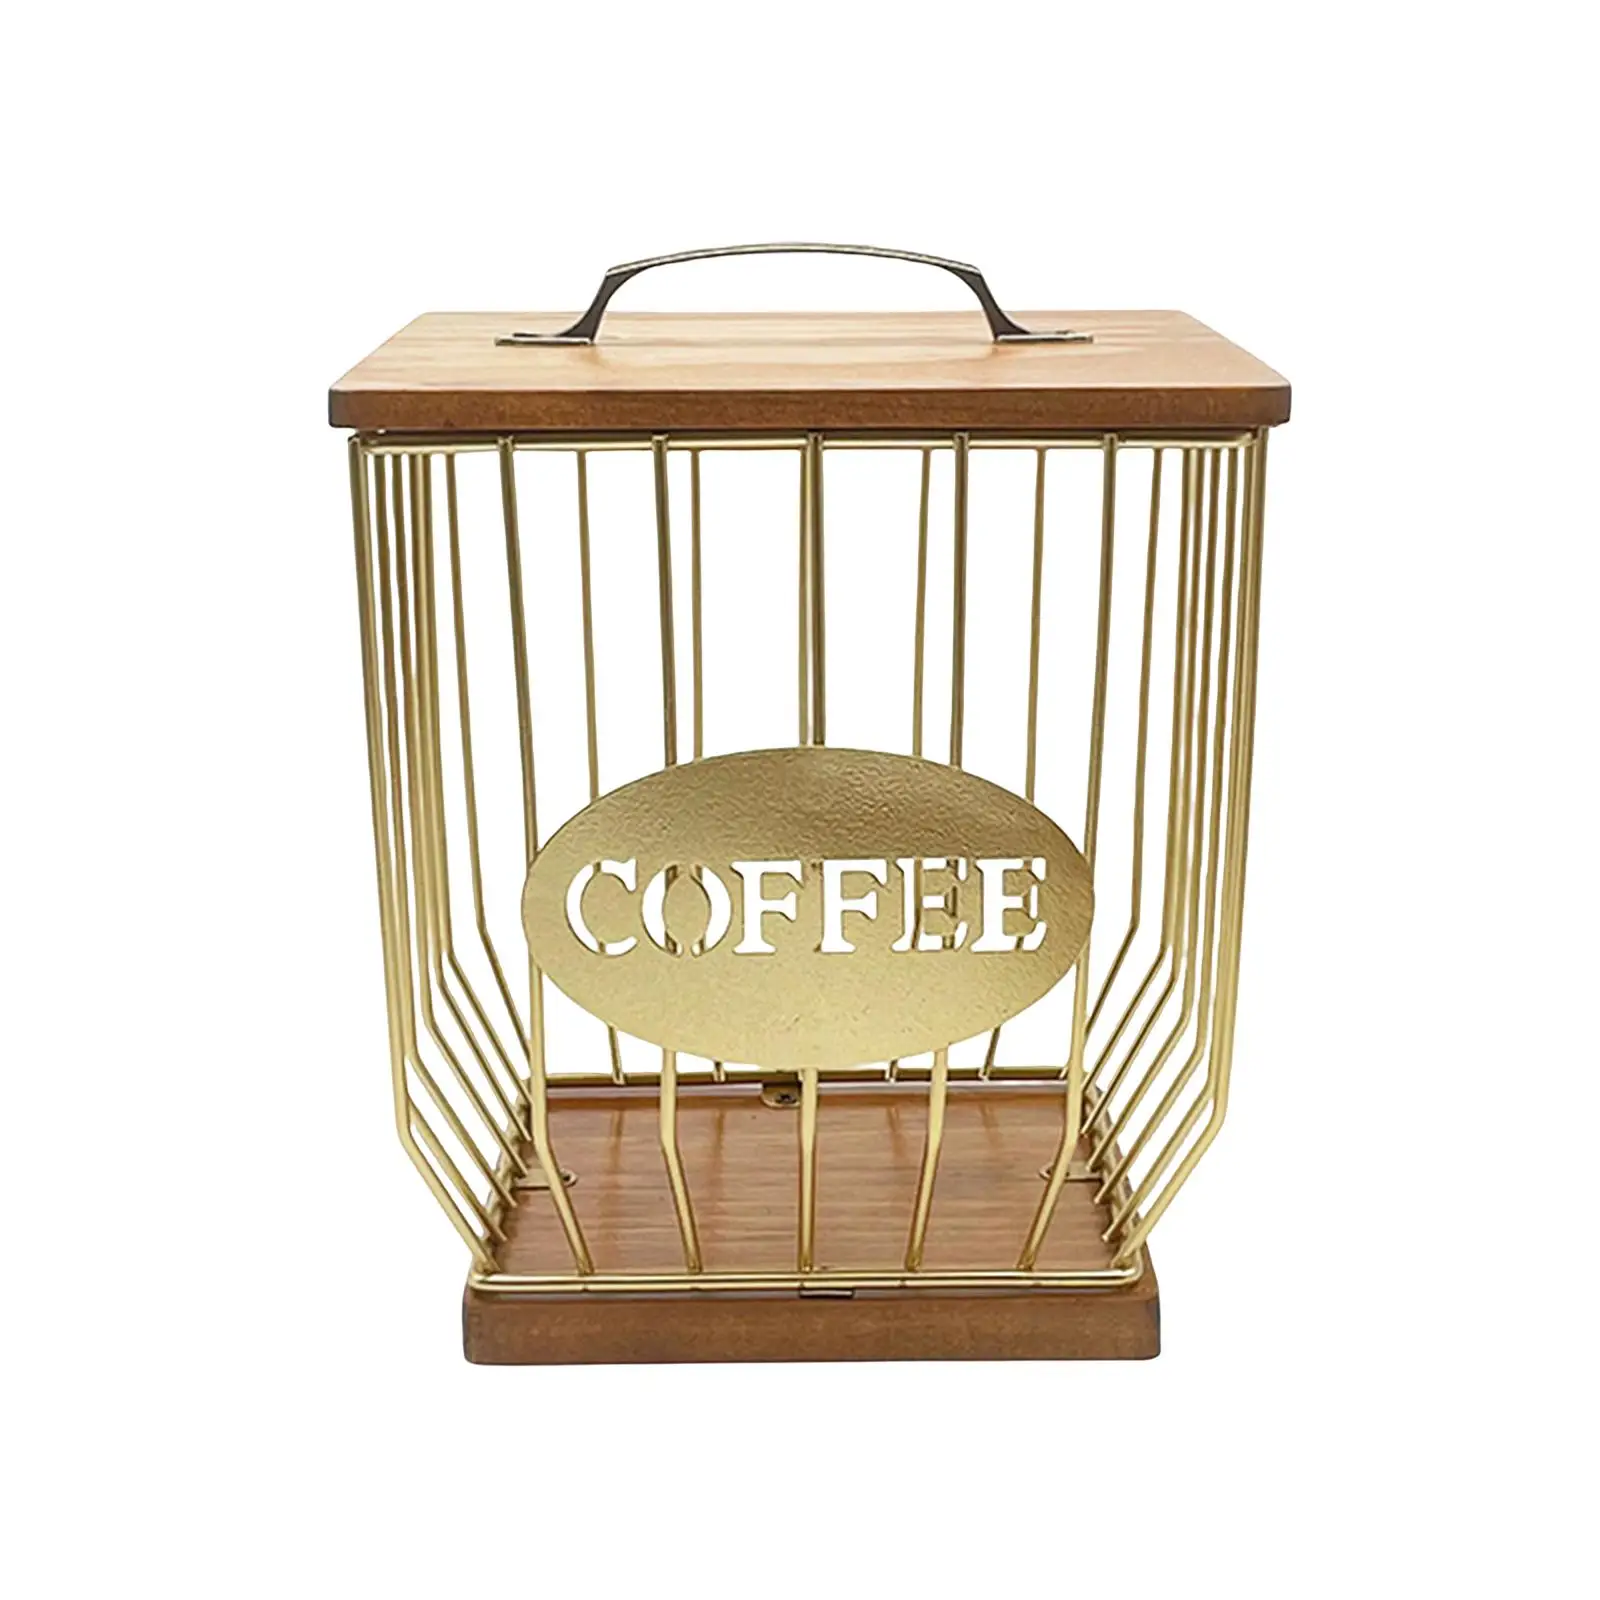 Large Capacity Coffee Pod Holder, Multi Espresso Capsule Organizer, Coffee Pod Storage Basket for All Coffee